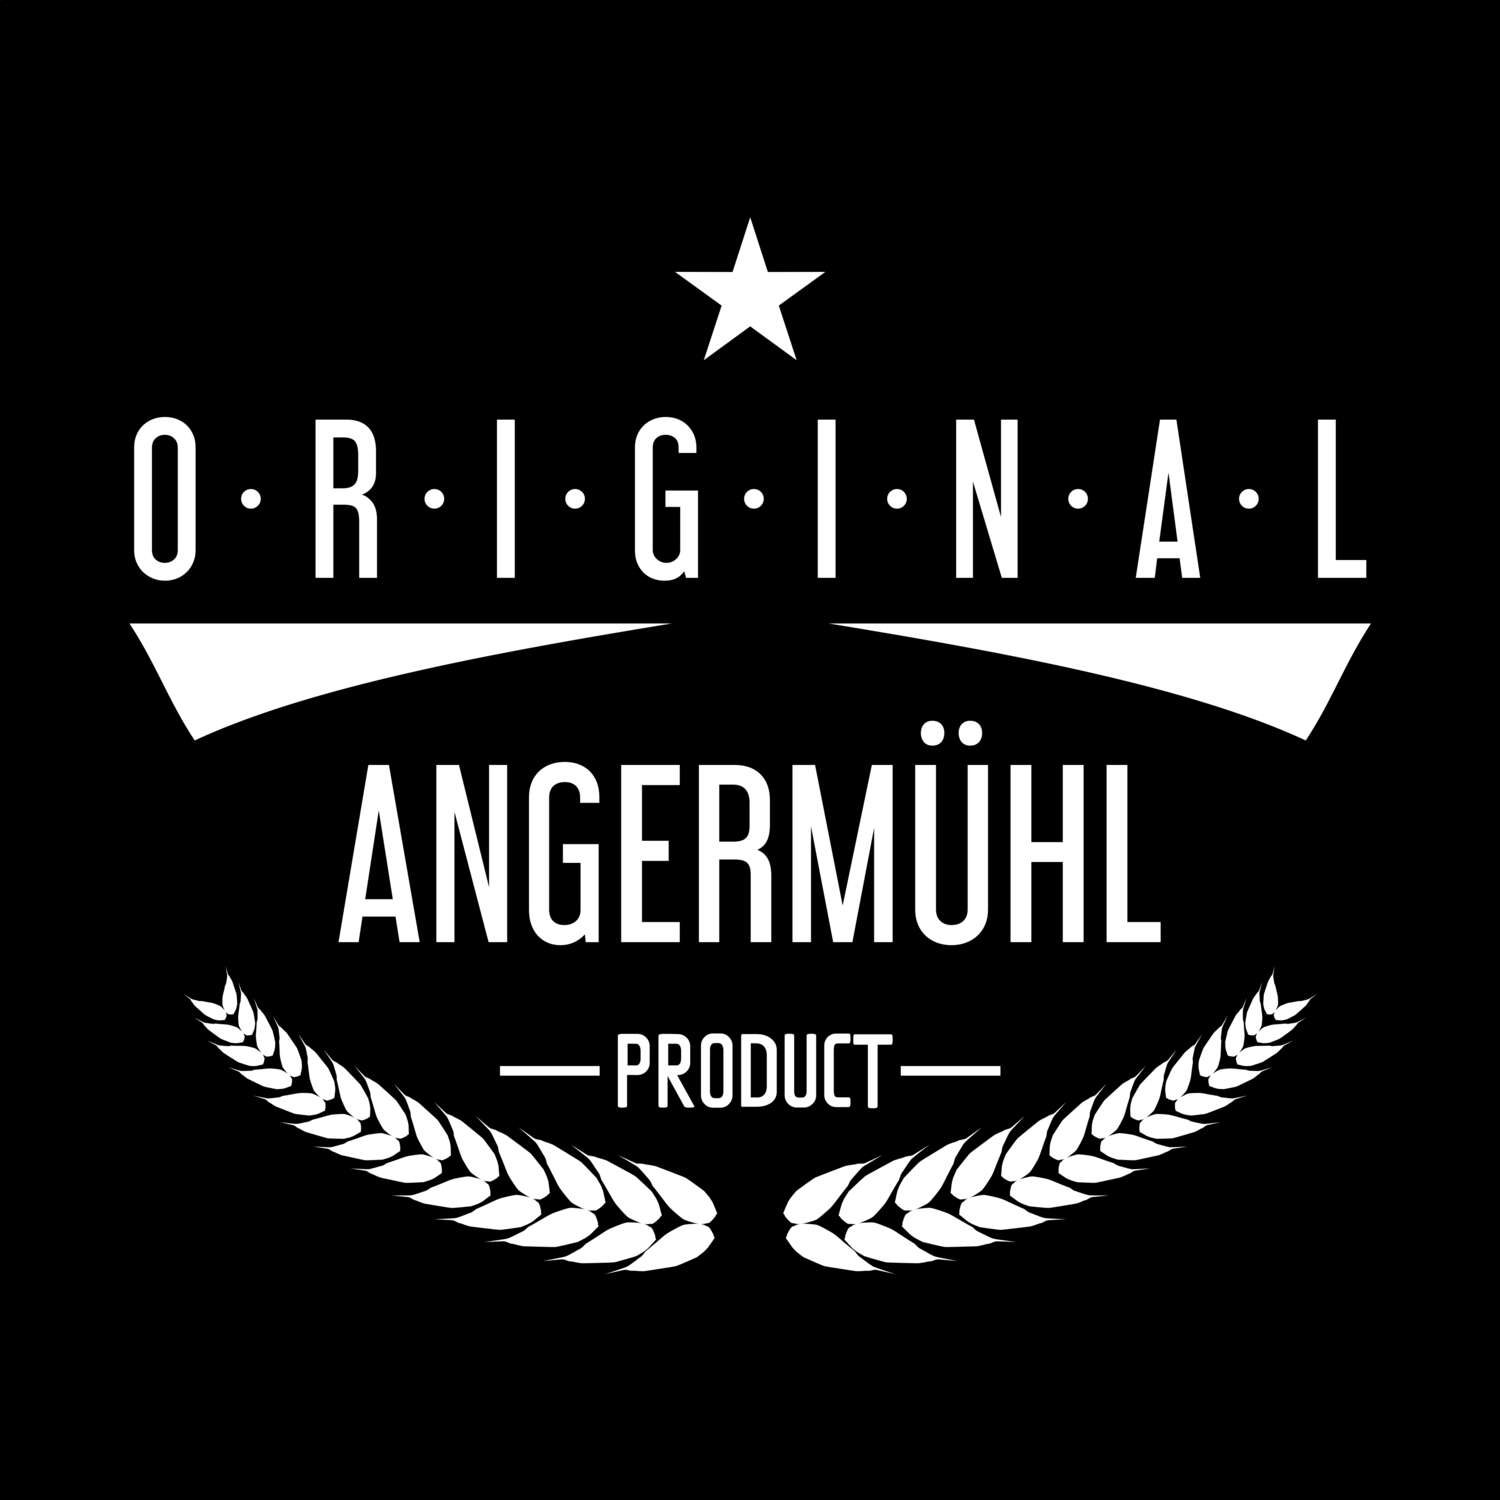 Angermühl T-Shirt »Original Product«